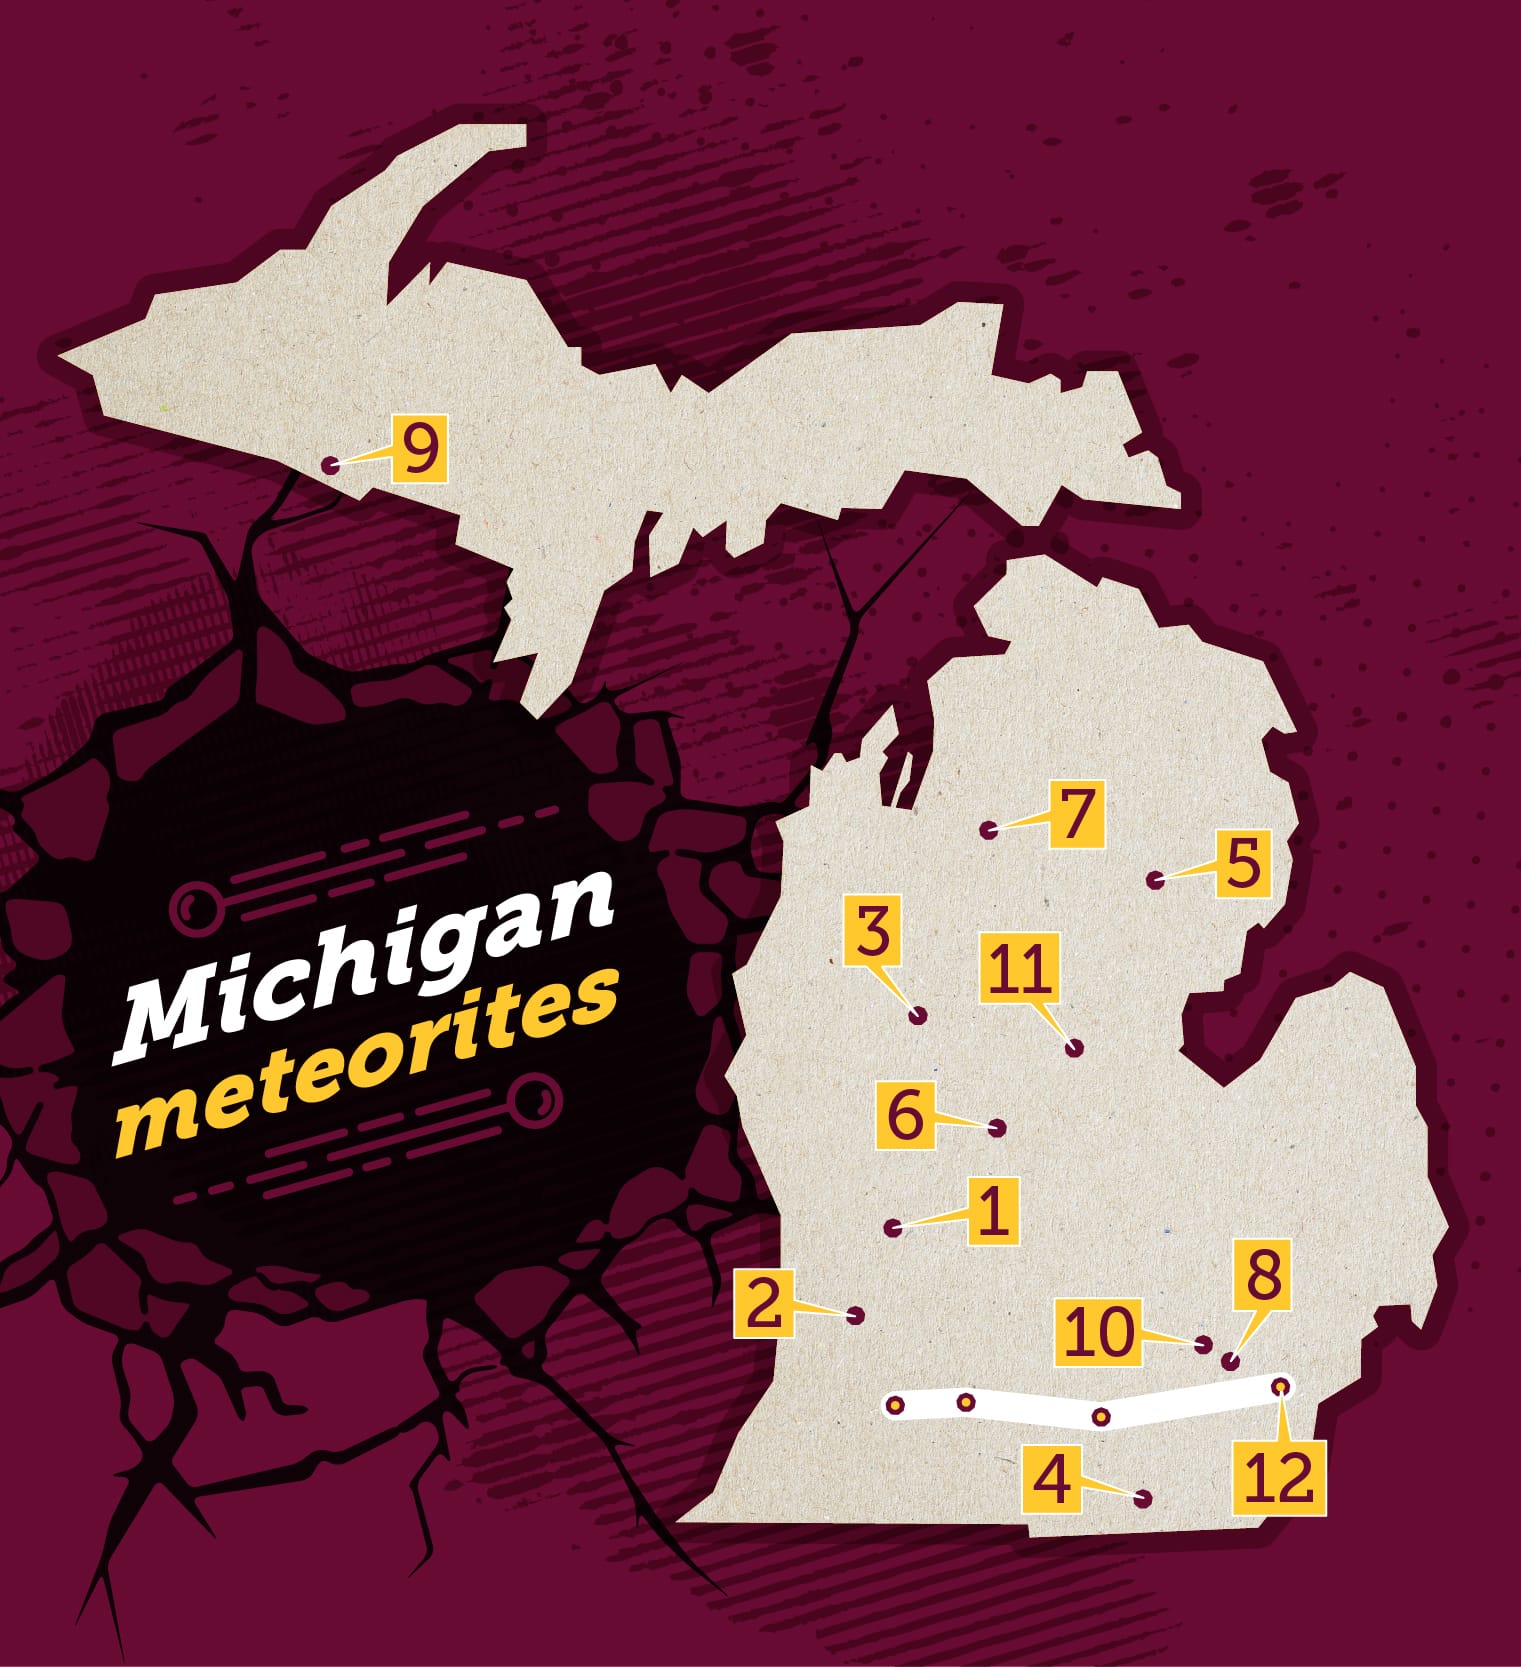 Michigan Meteorites_numbered